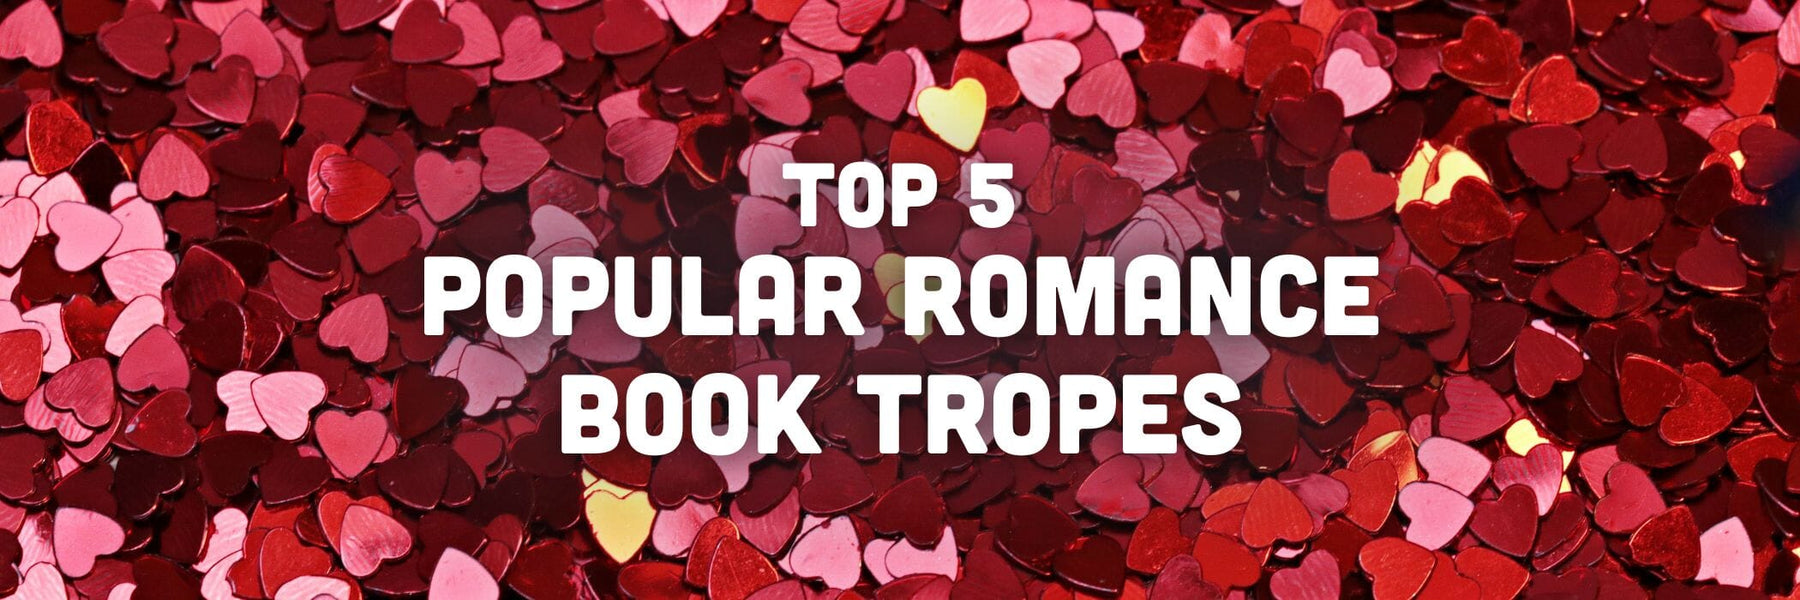 Top 5 Popular Romance Book Tropes